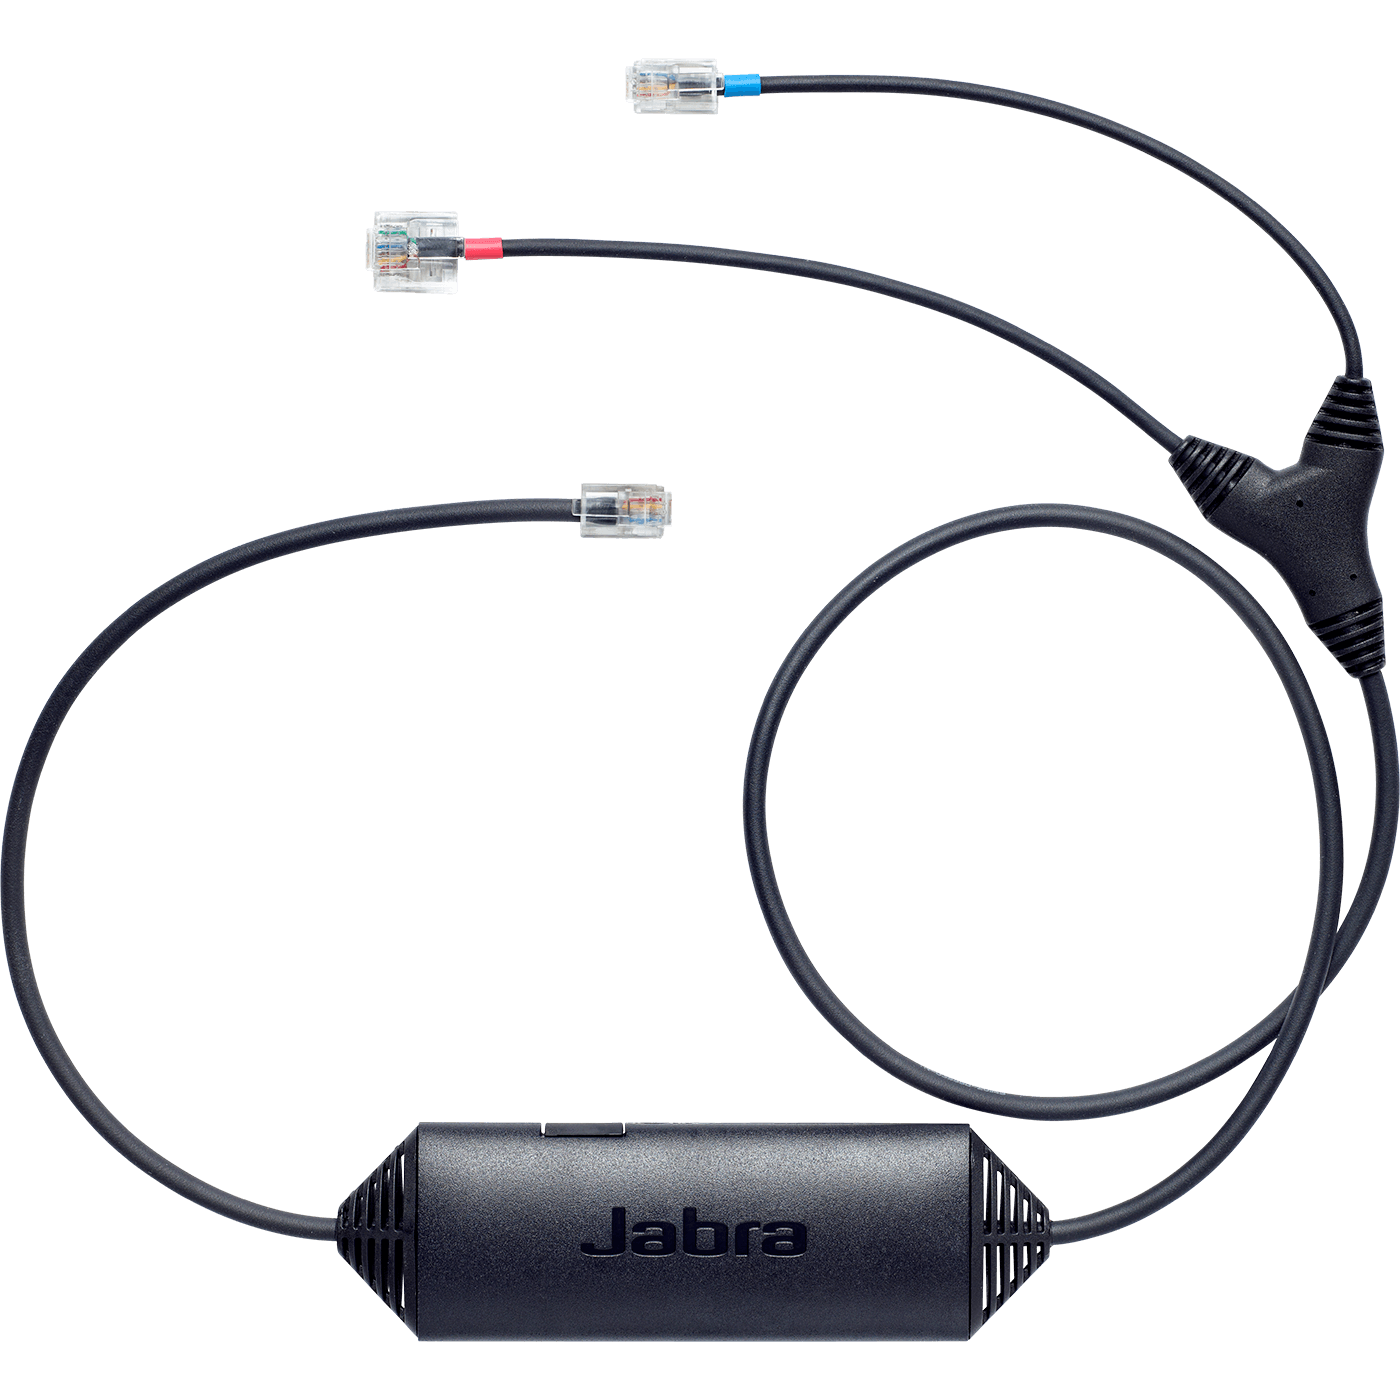 Jabra Link 14201-33 を使用して Jabra ワイヤレスヘッドセットを 